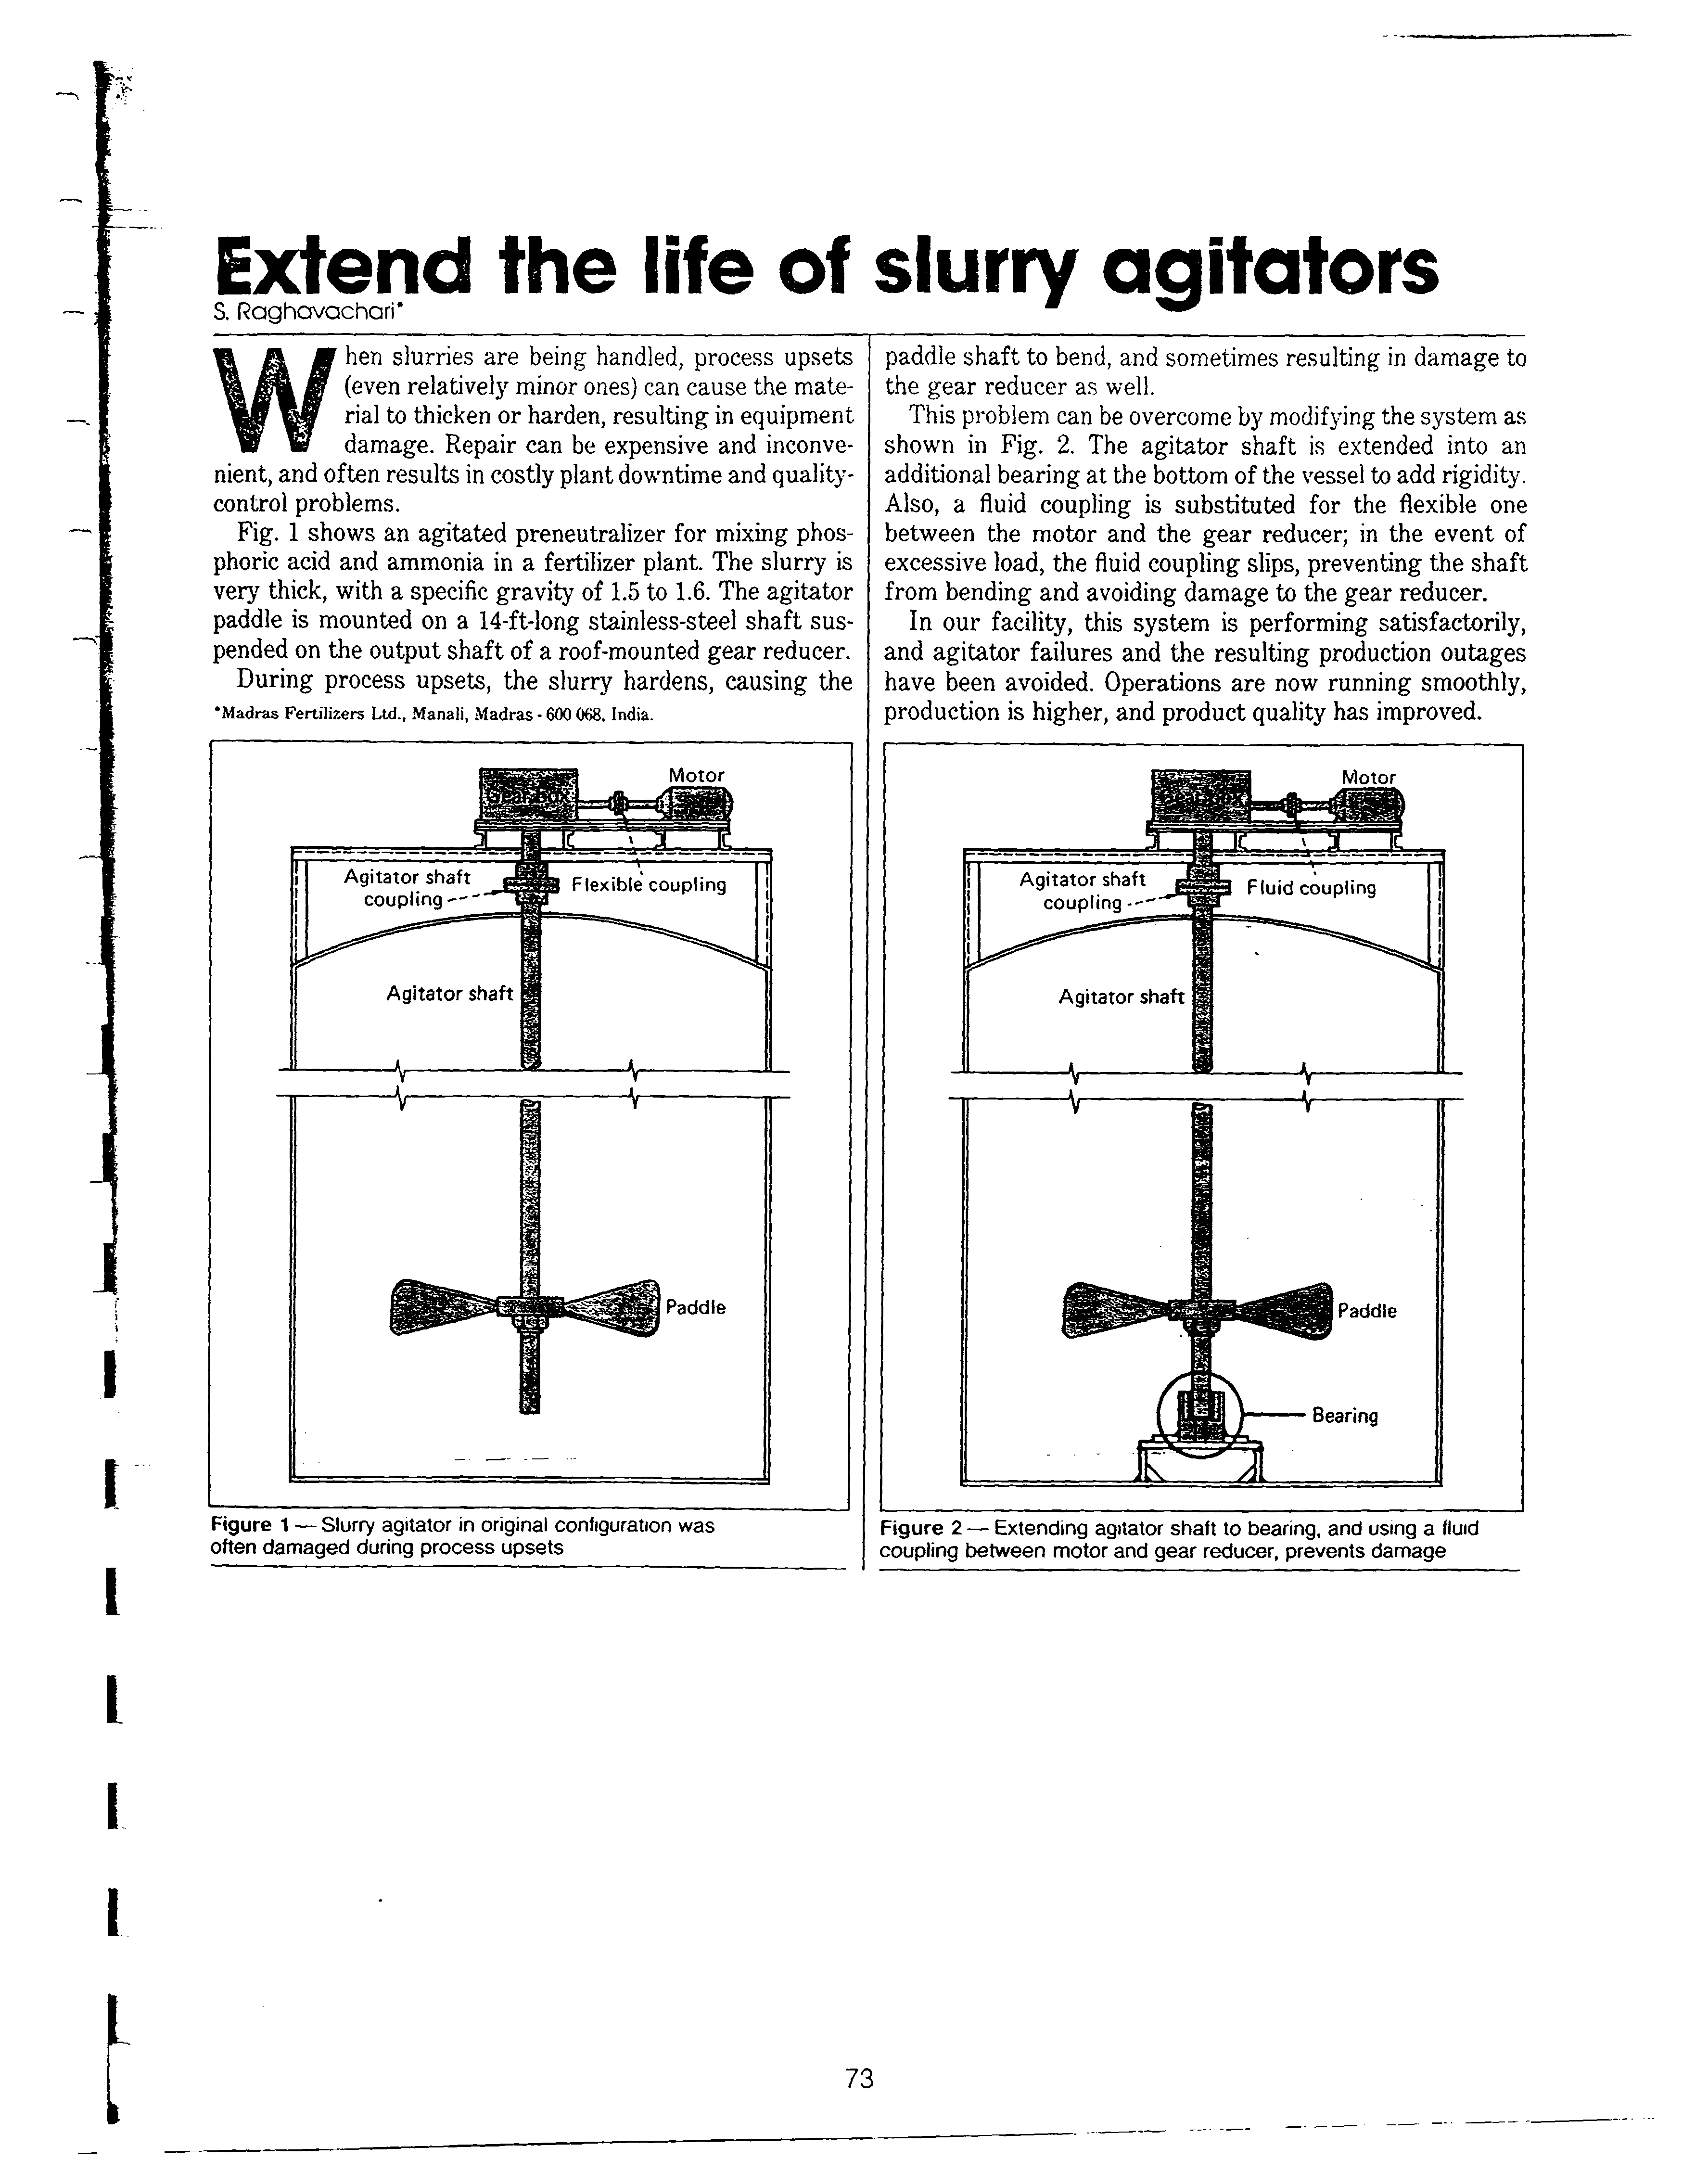 Figure 1 — Slurry agitator in original configuration was often damaged during process upsets...